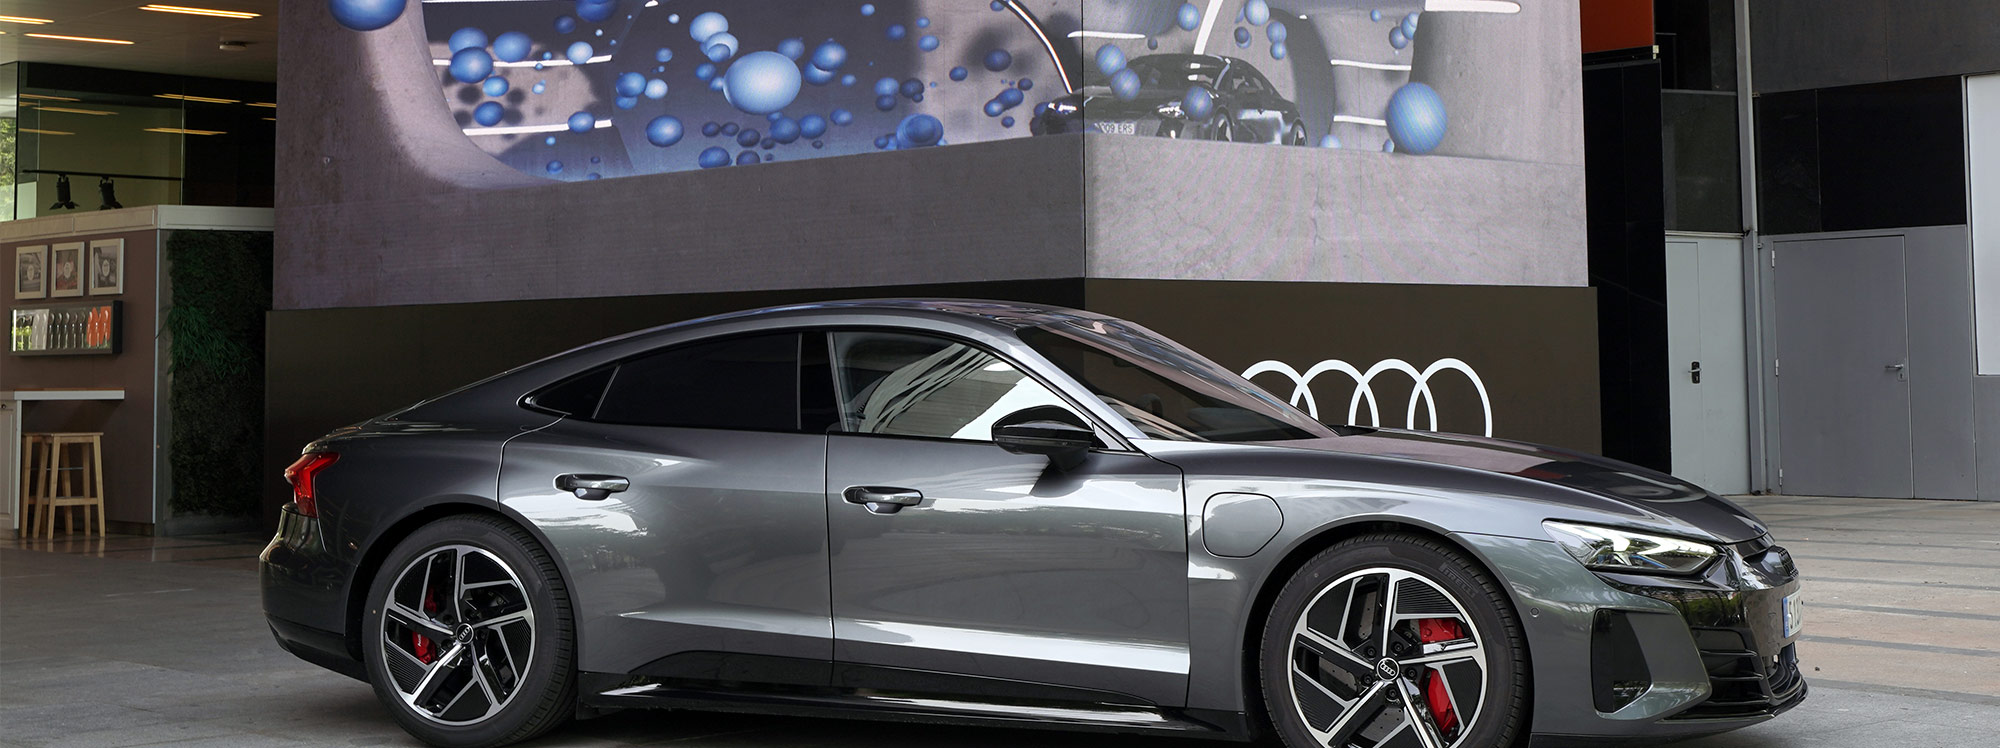 El Audi RS e-tron GT, protagonista de una experiencia inmersiva 3D pionera